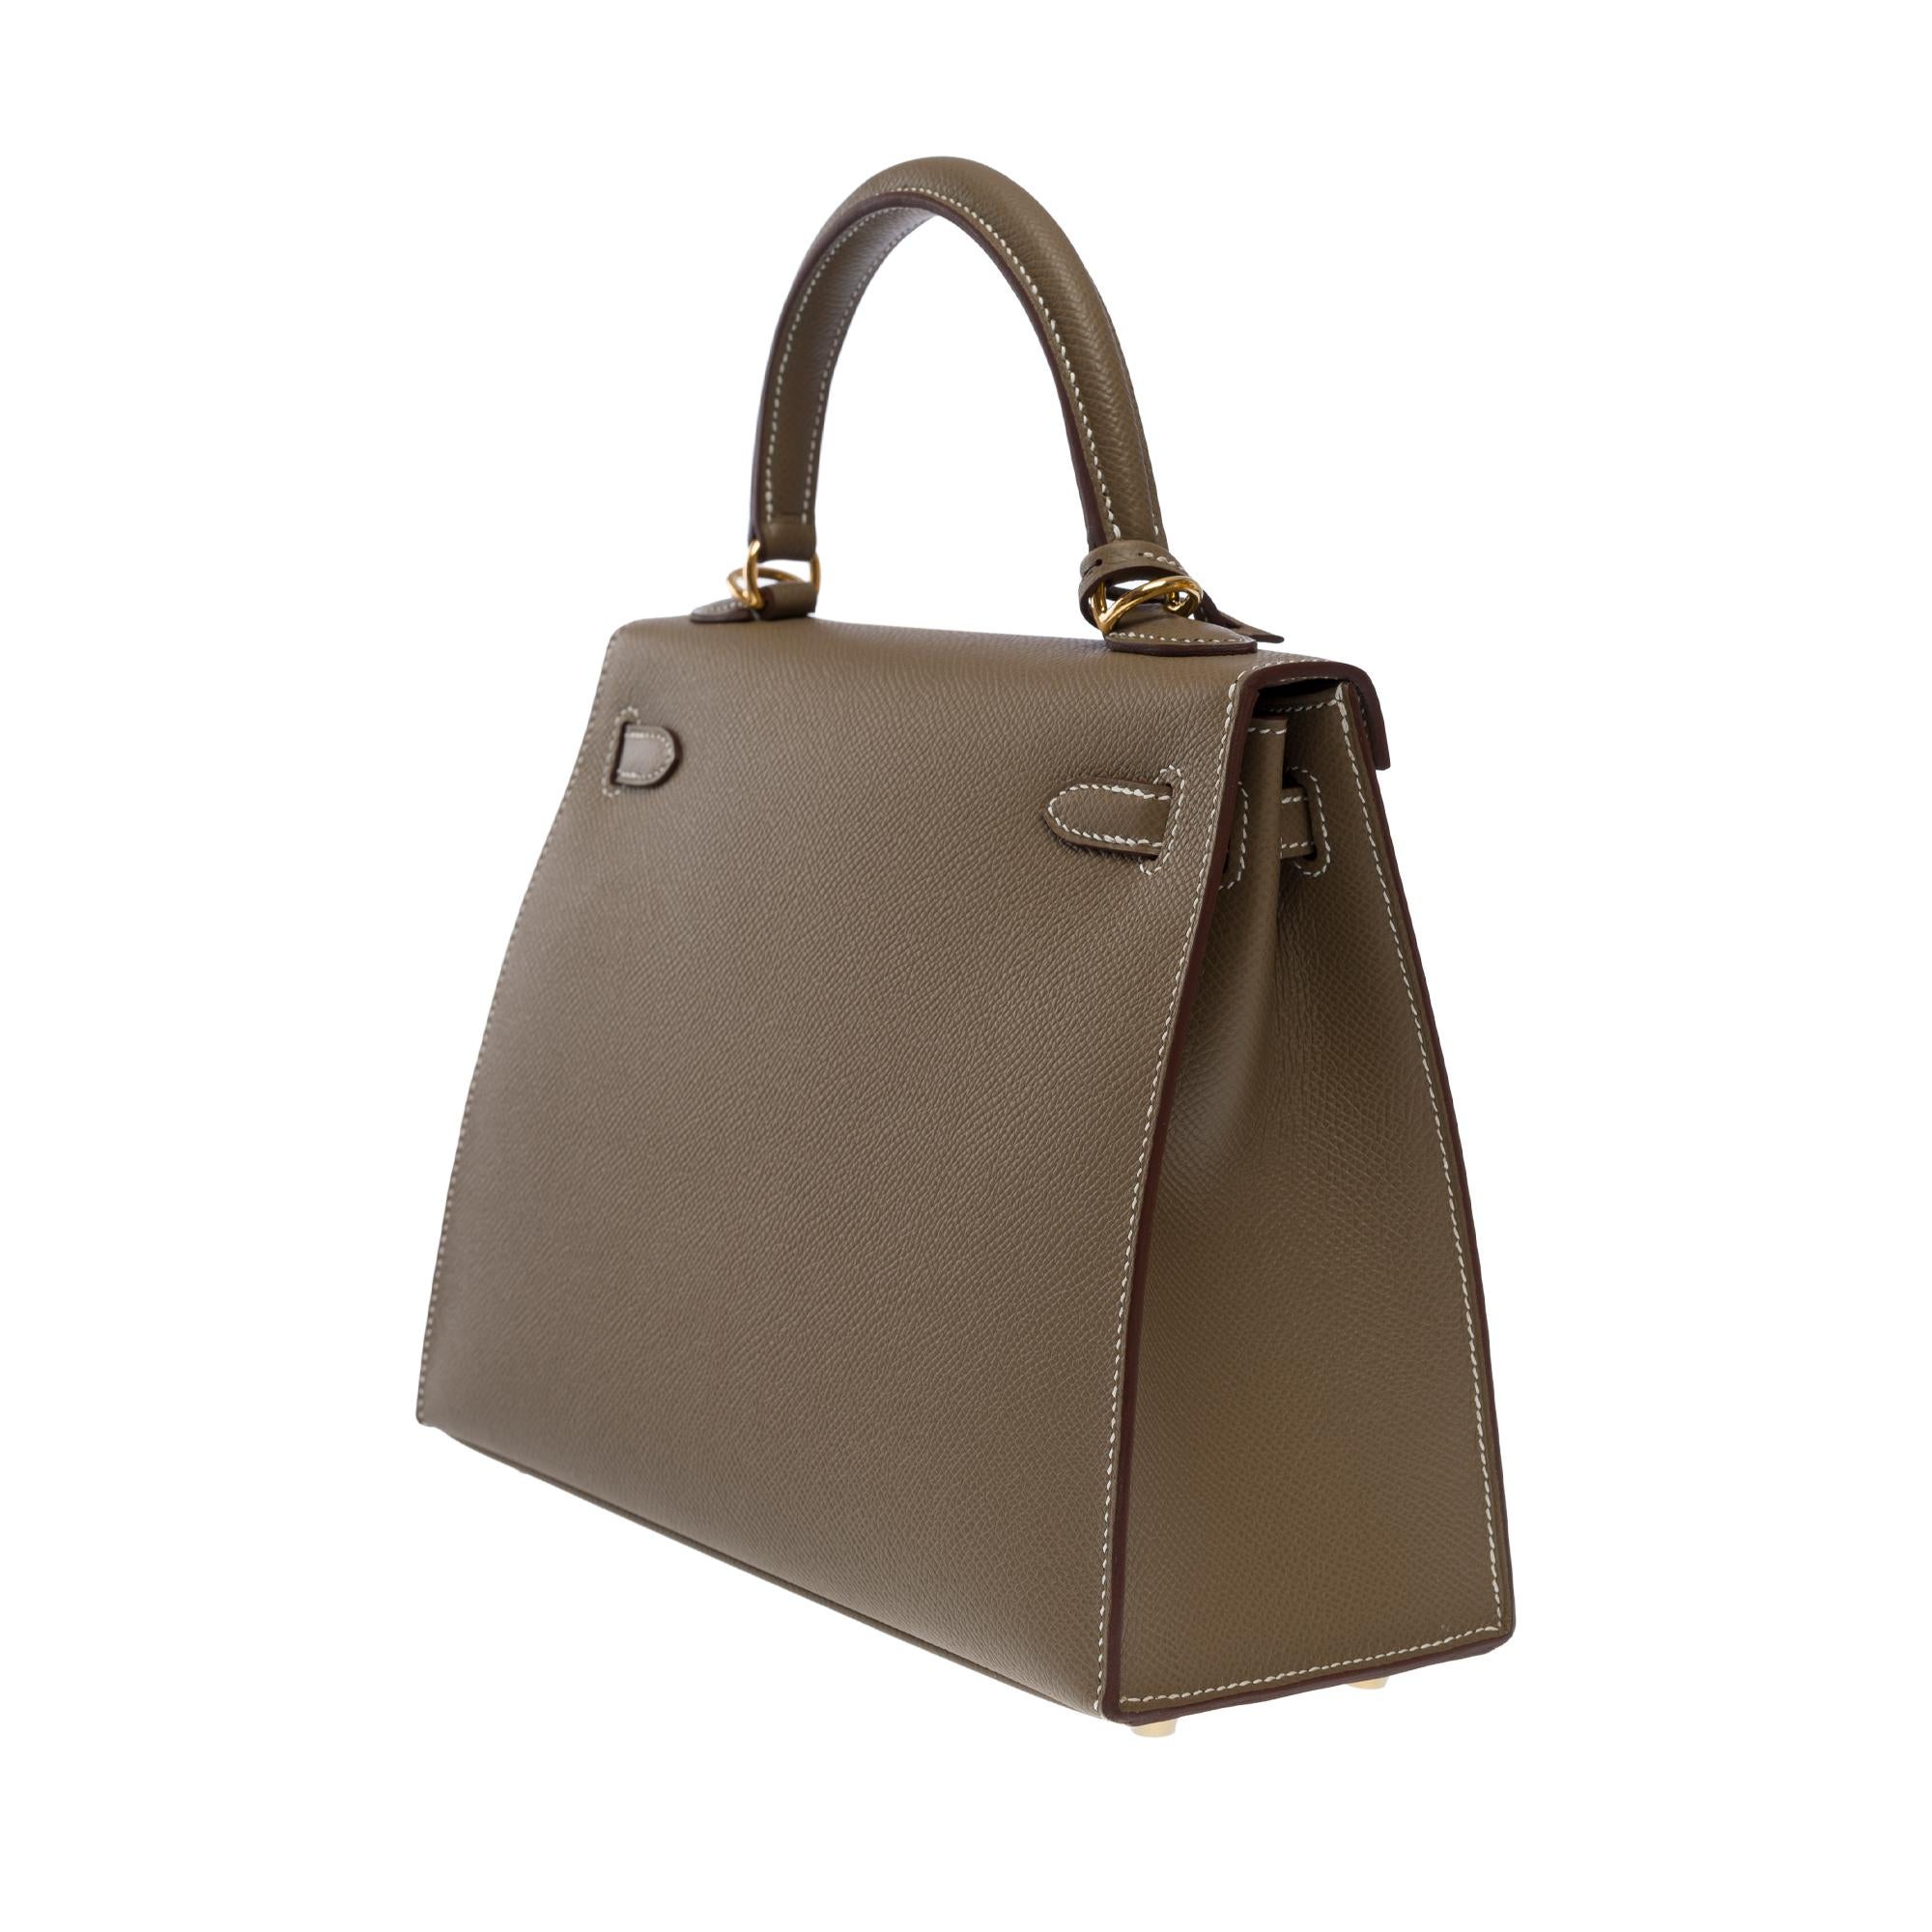 Women's New Amazing Hermès Kelly 25 handbag strap in Etoupe epsom leather, GHW